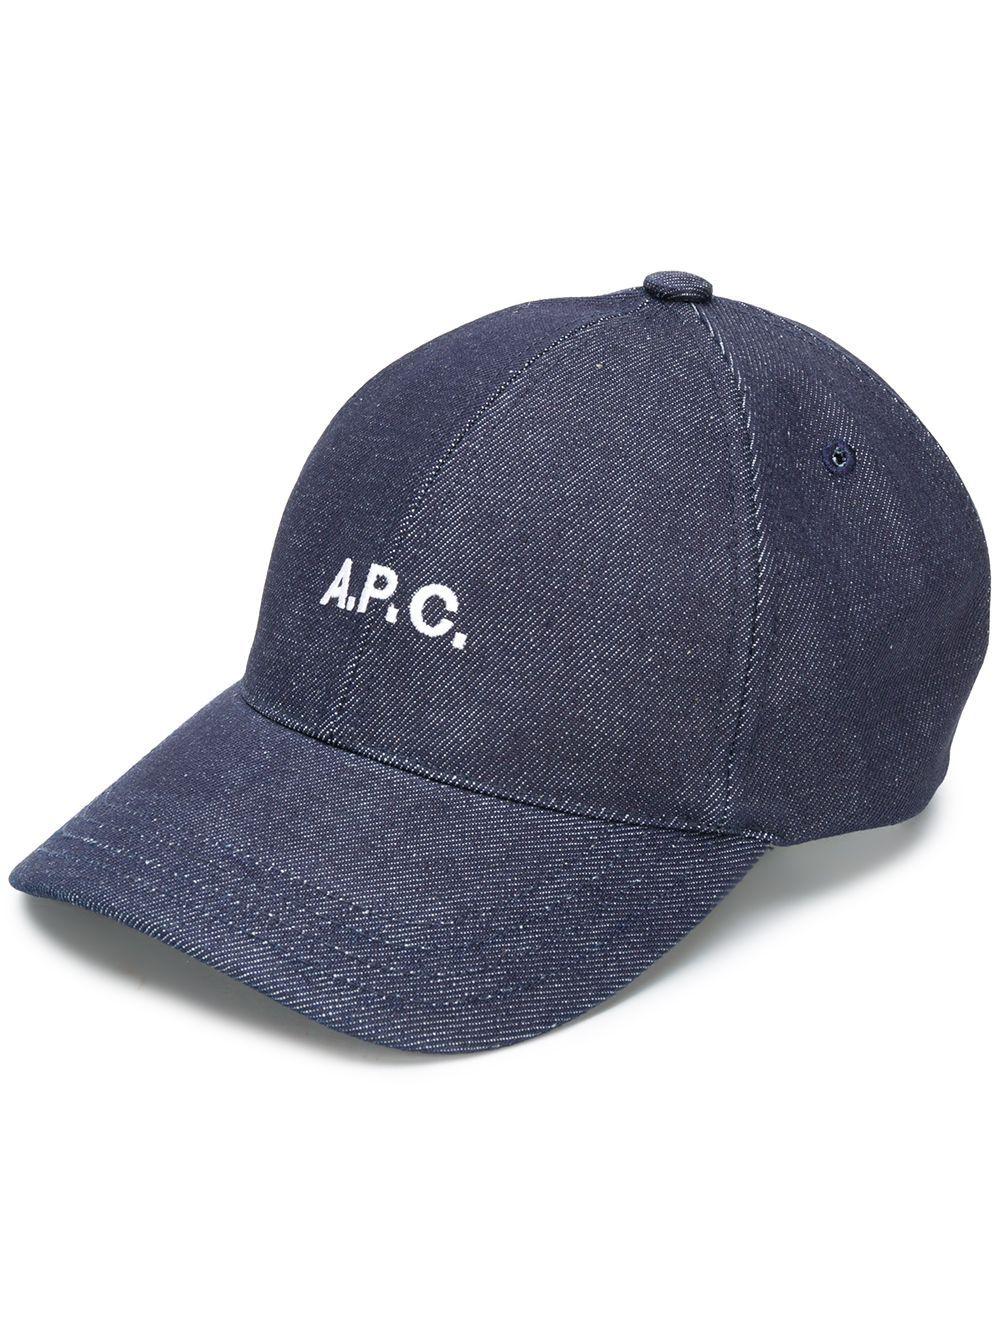 A.P.C. Denim Baseball Cap in Blue for Men - Lyst